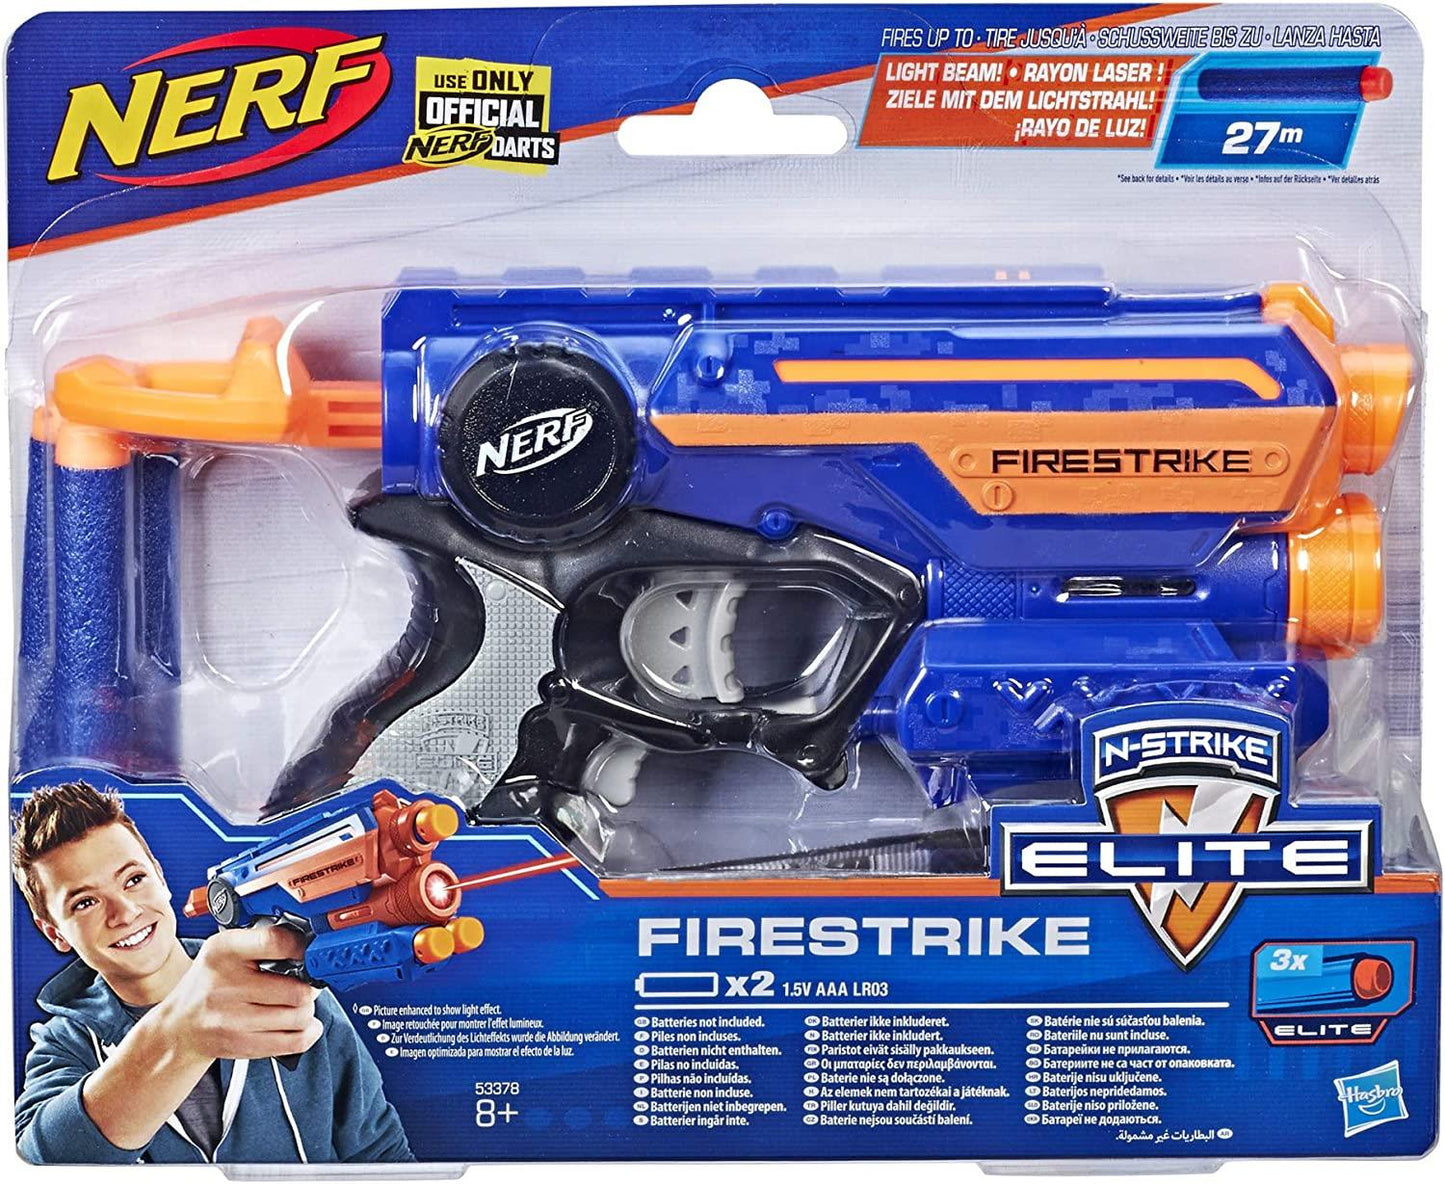 værtinde bleg Ydmyge Nerf N-Strike Elite Firestrike 53378 Blaster Toy Foam Dart Gun